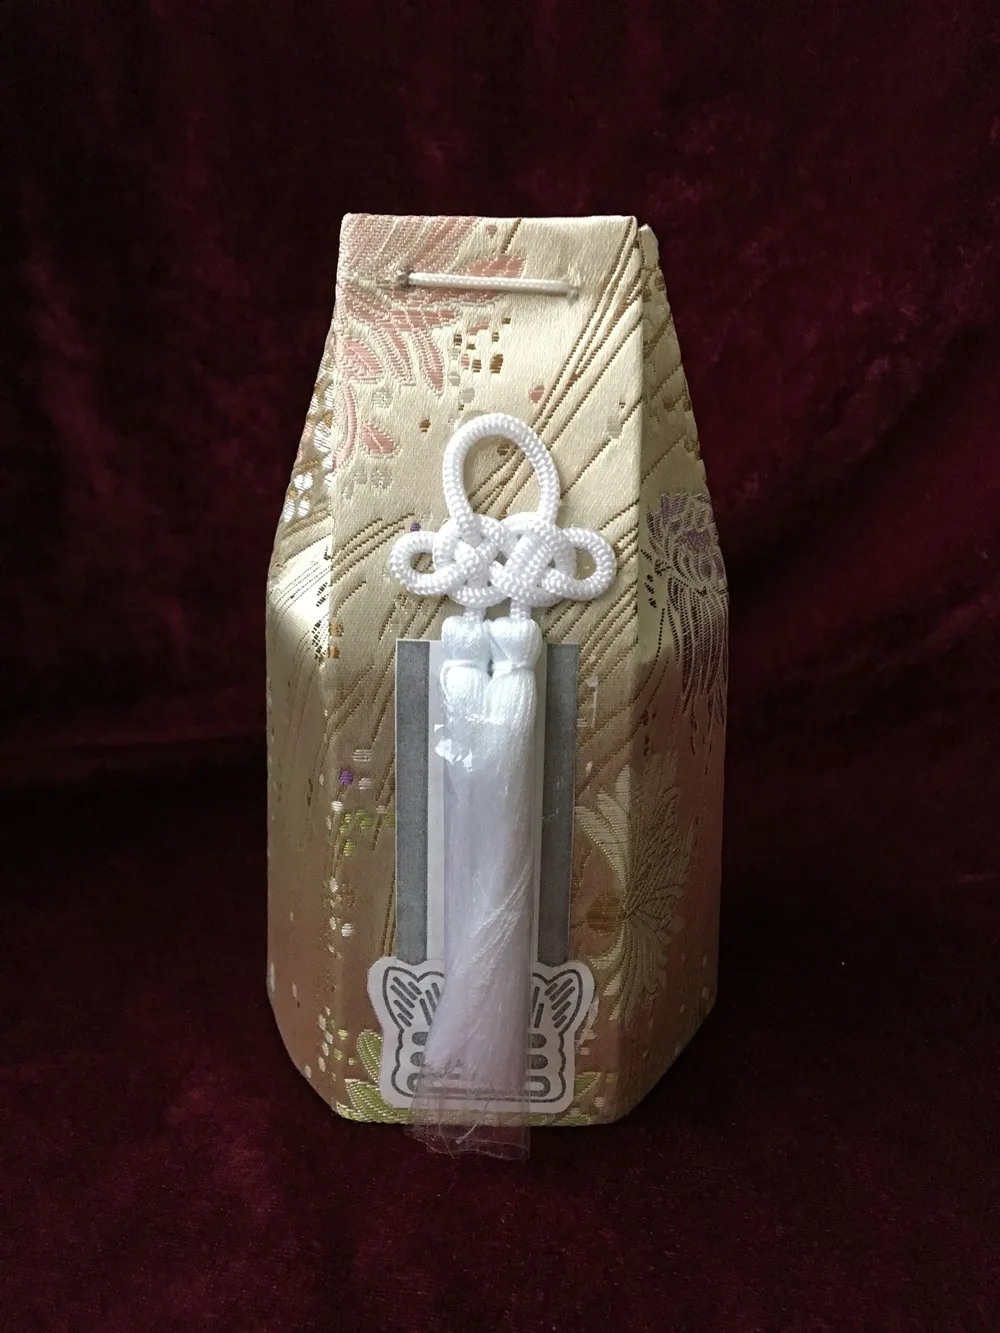 Japanese Classic Style Ash Box 2.3-3" Pet Urn Decoration - Buy Pet Urn